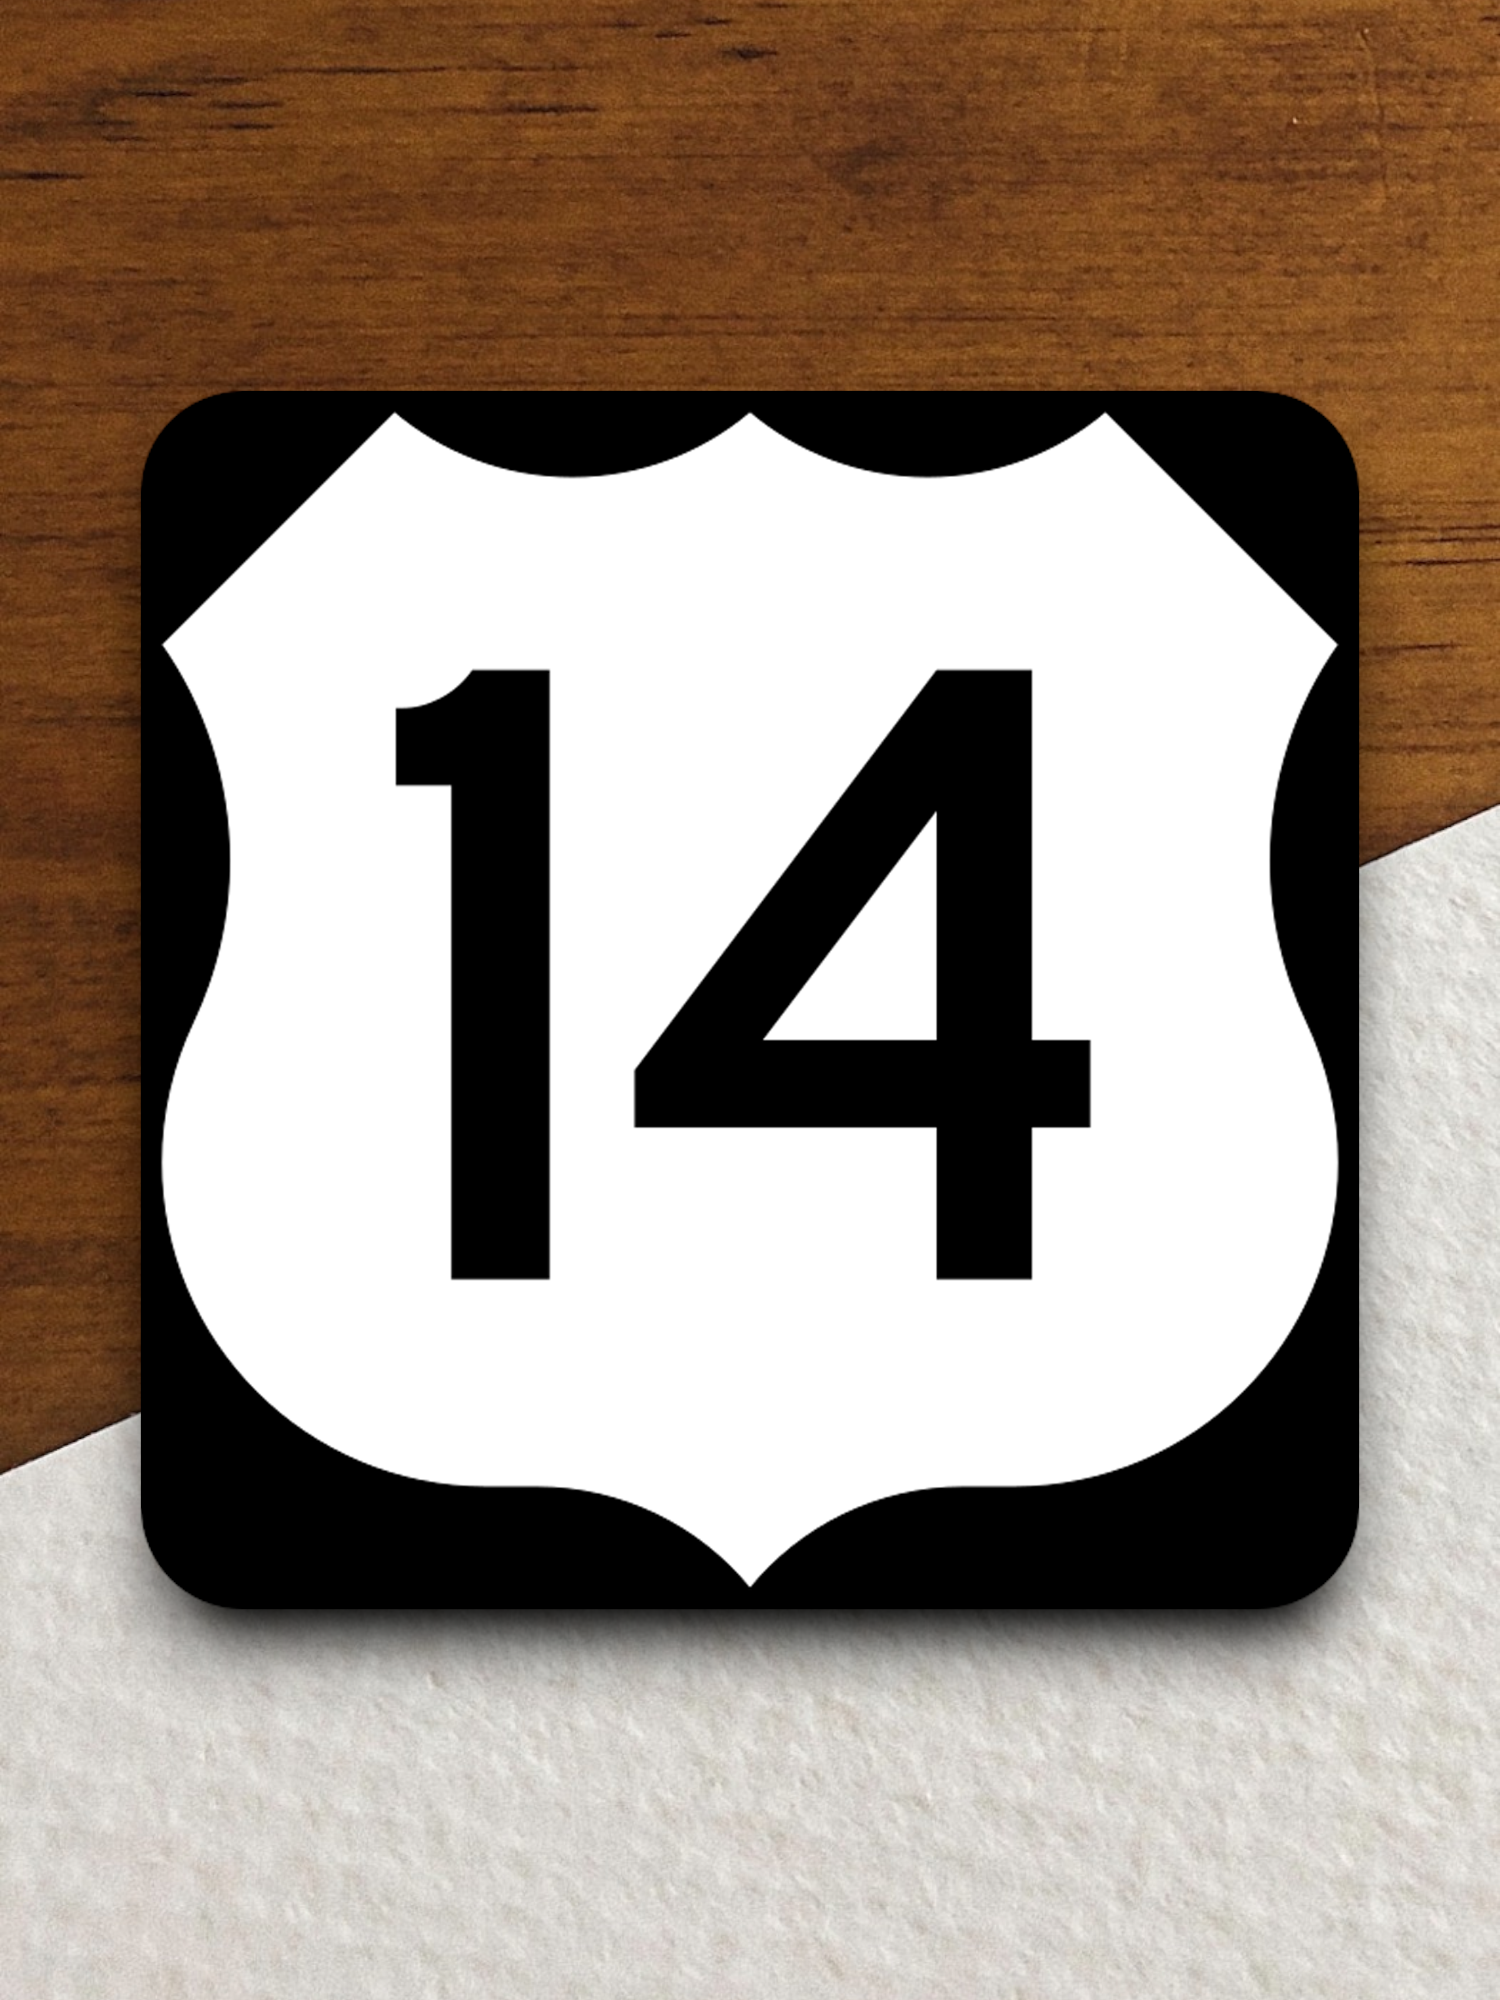 U.S. Route 14 Road Sign Sticker